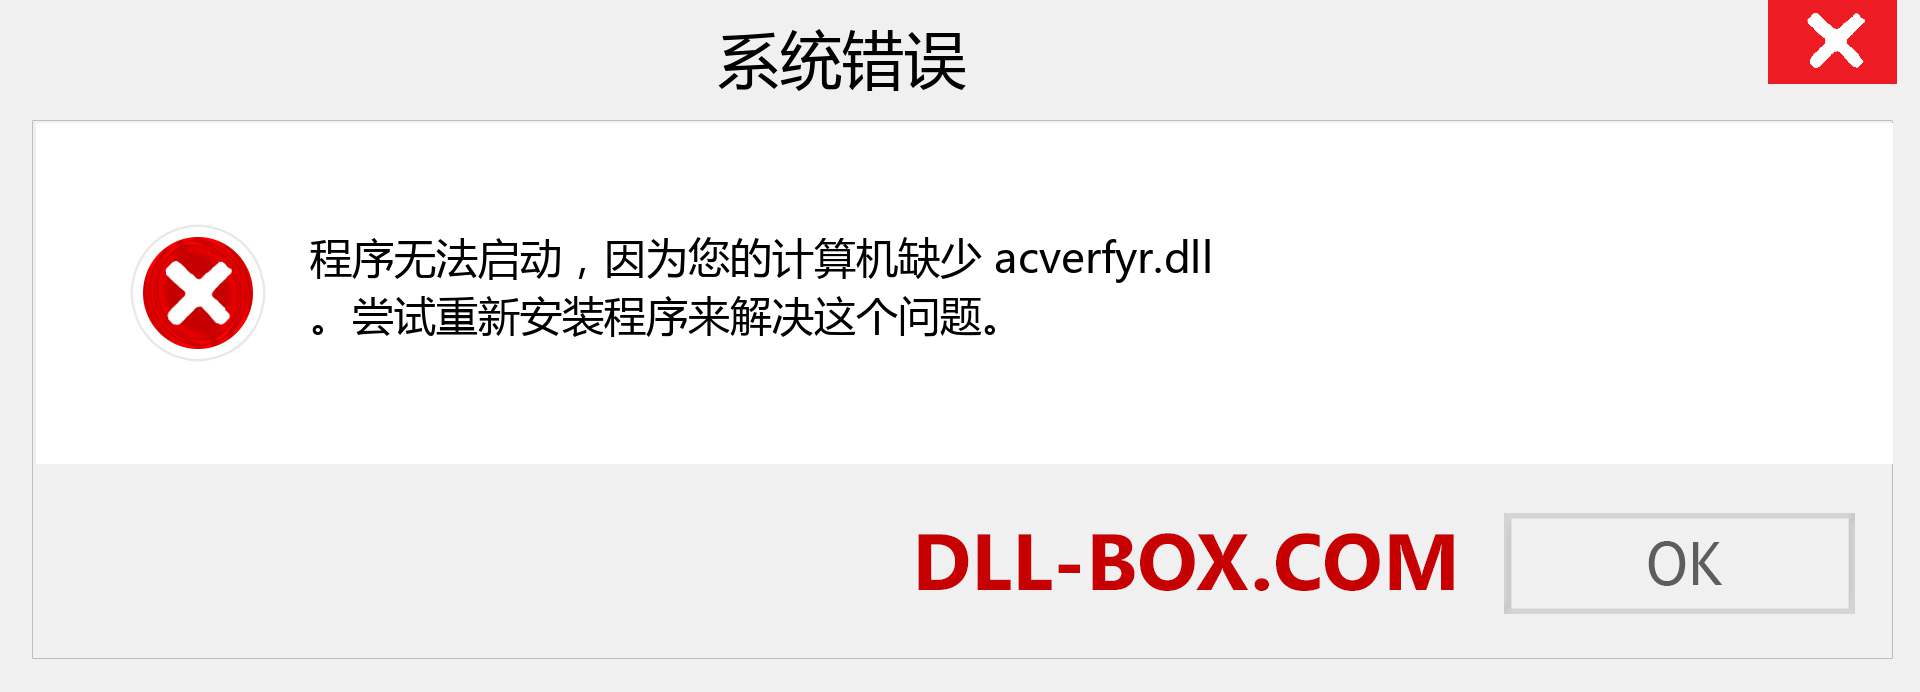 acverfyr.dll 文件丢失？。 适用于 Windows 7、8、10 的下载 - 修复 Windows、照片、图像上的 acverfyr dll 丢失错误